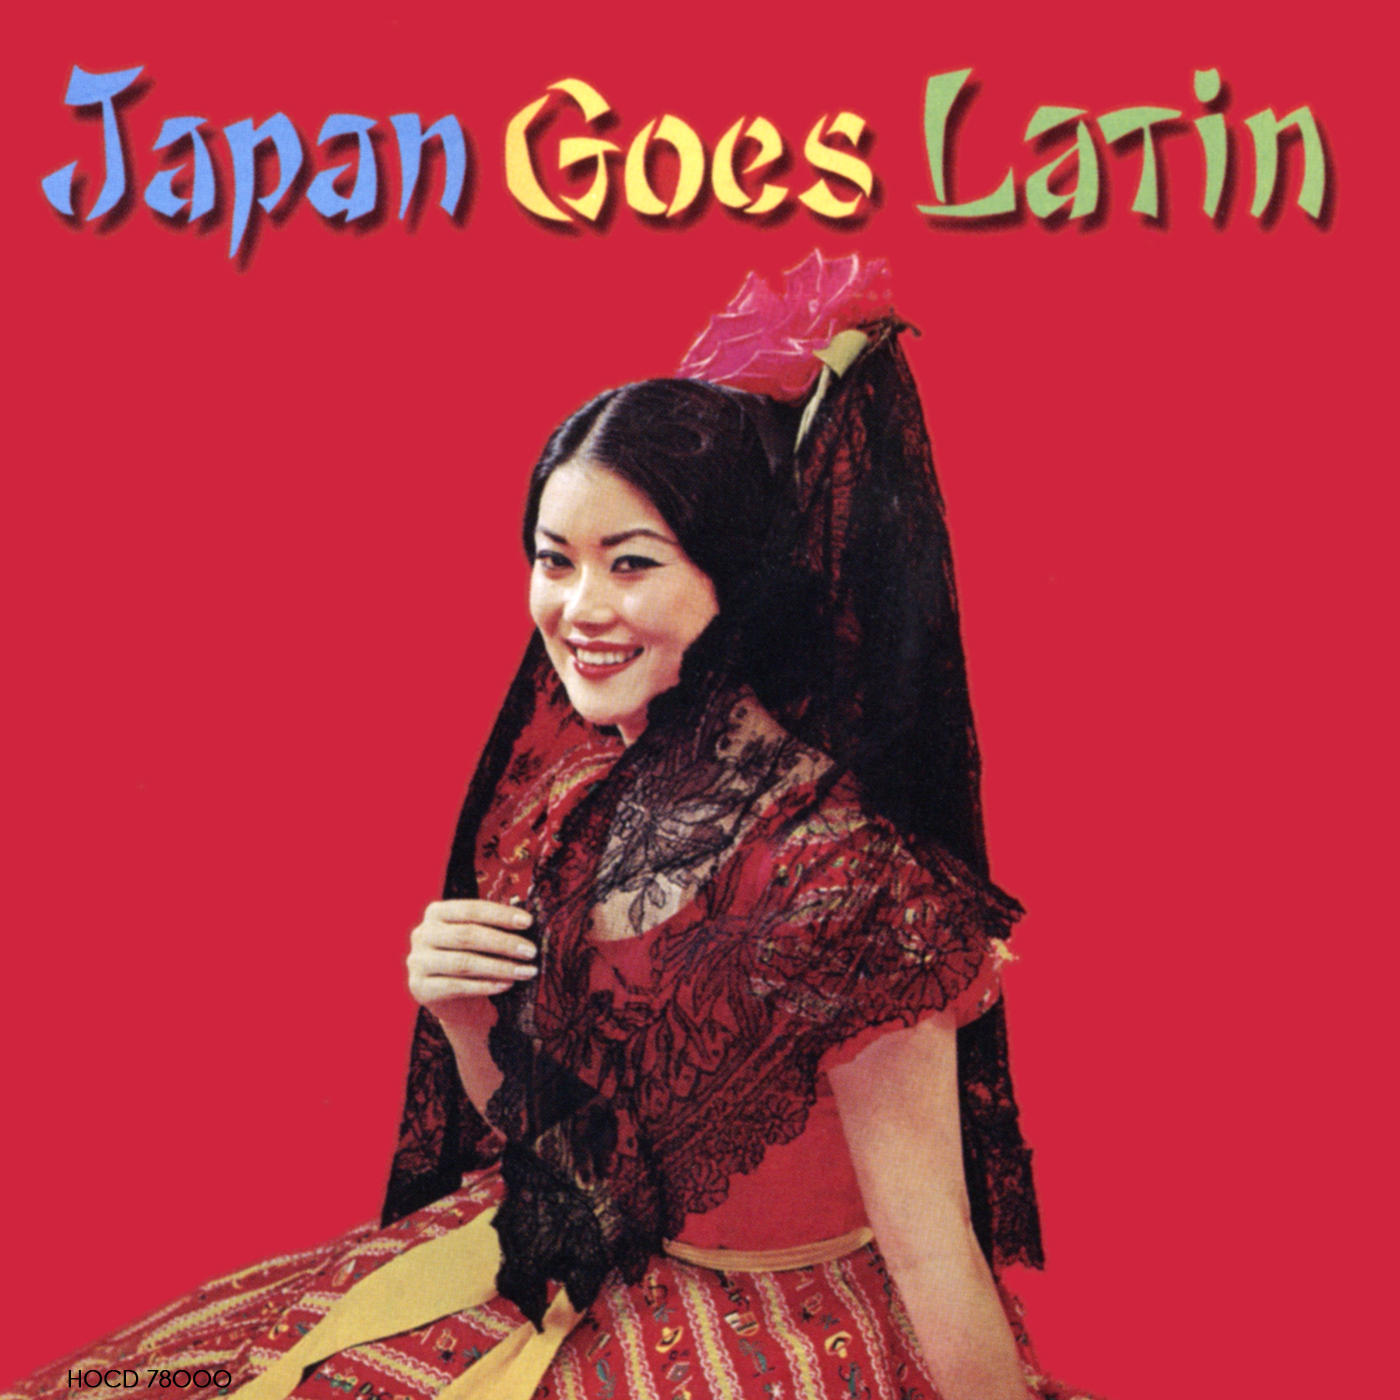 Japan Goes Latin